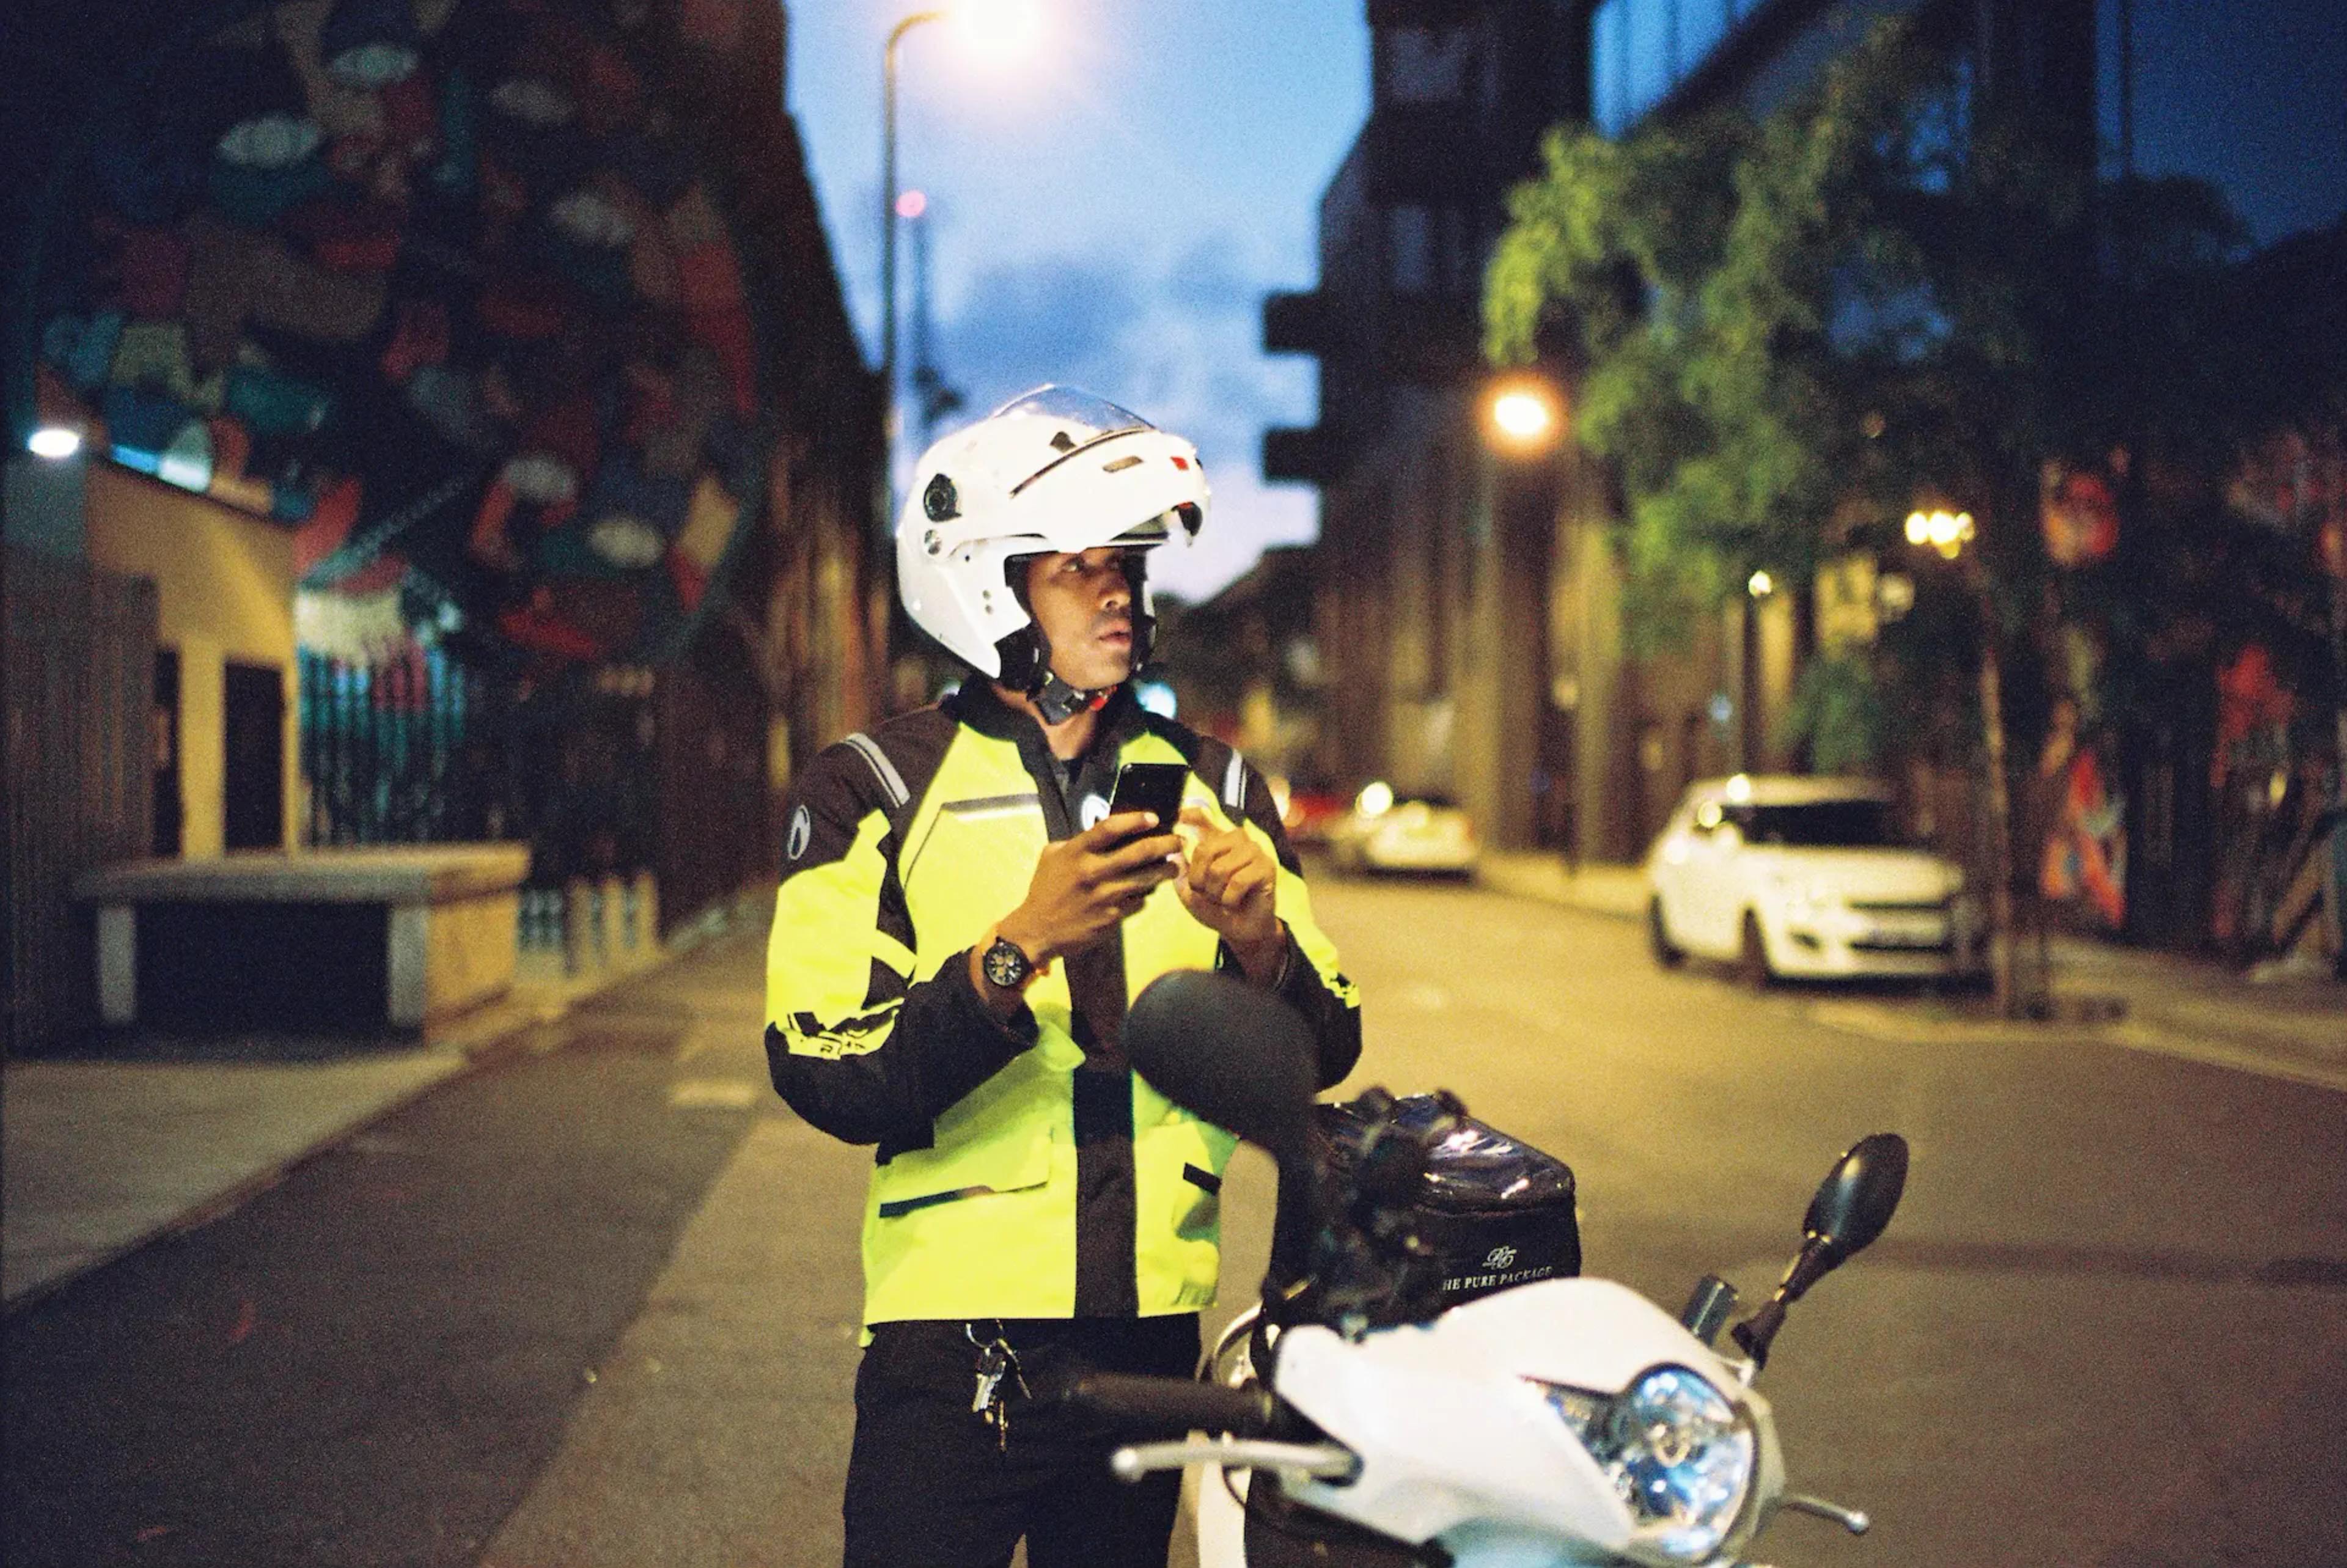 Driver checking phone next to bike